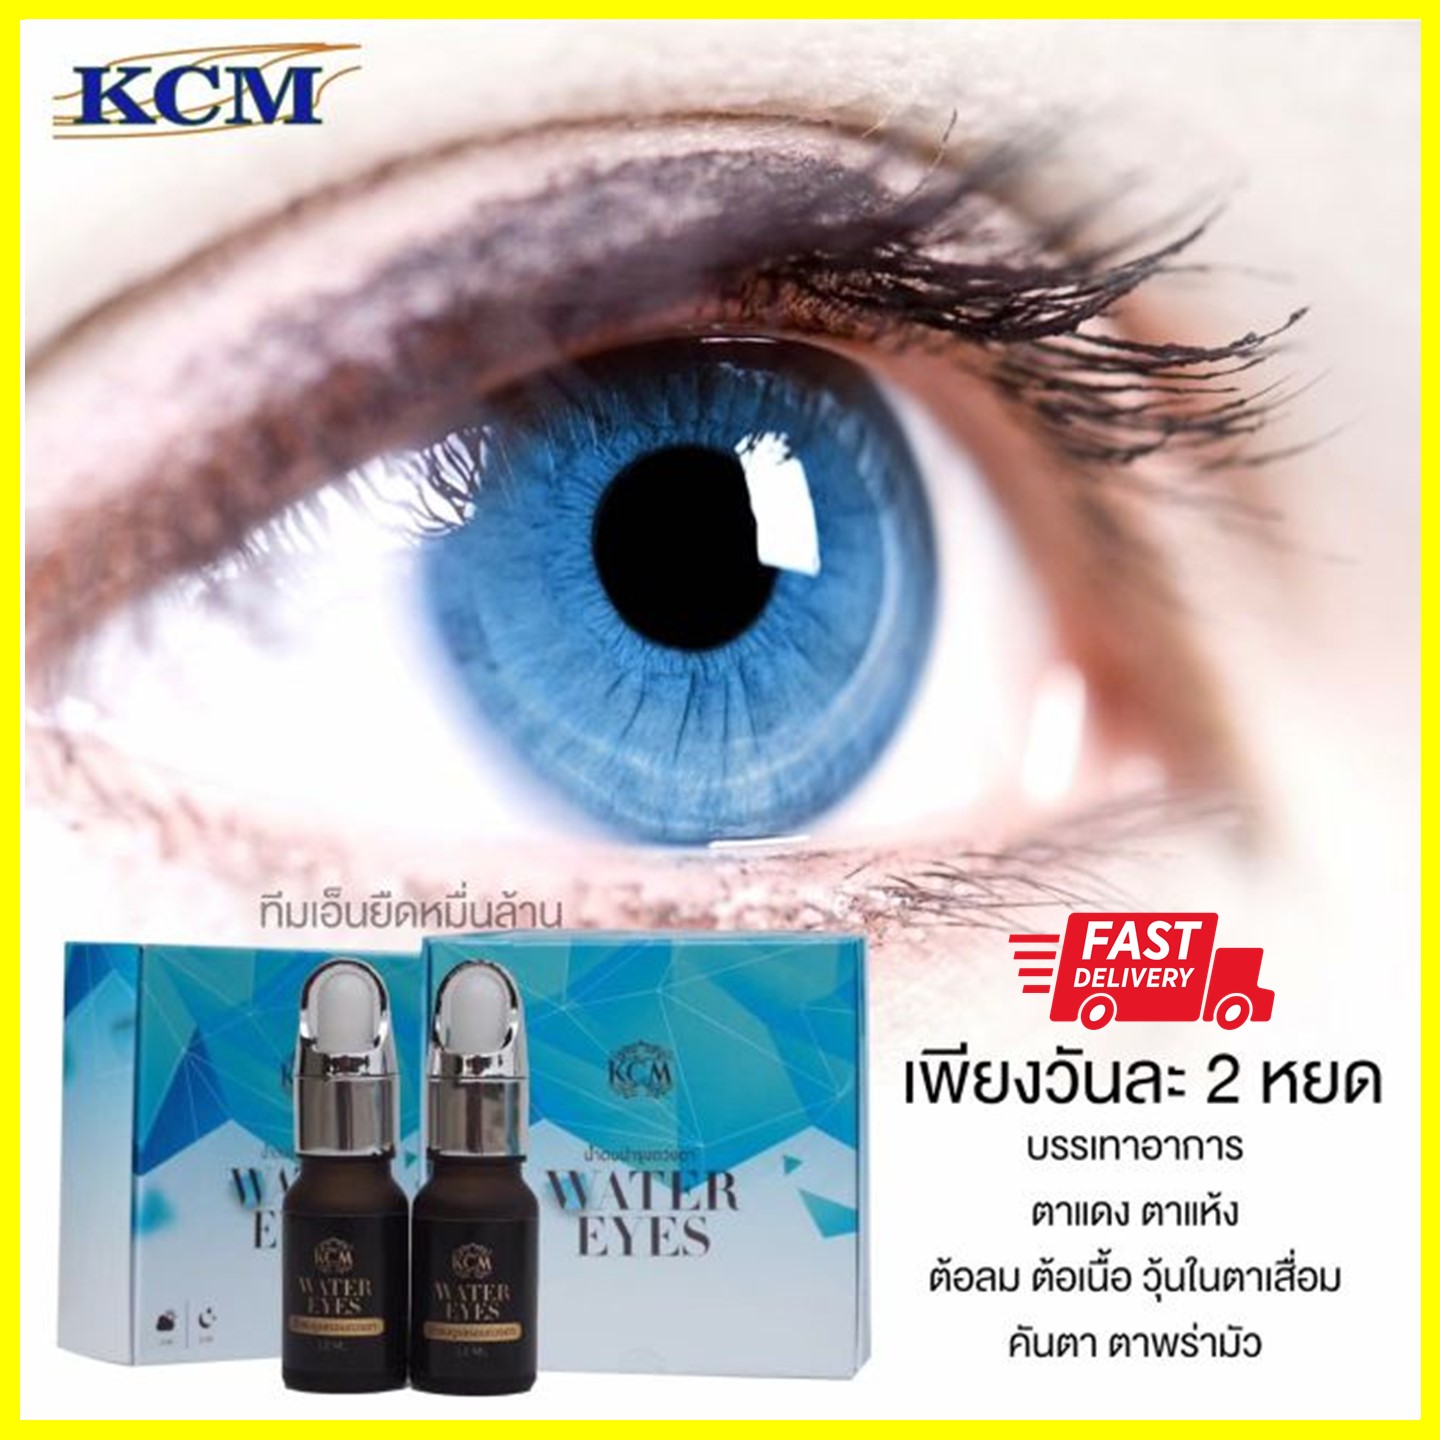 KCM Water Eyes น้ำตบบำรุงดวงตา ของแท้ 100% ส่งด่วนทั่วไทย